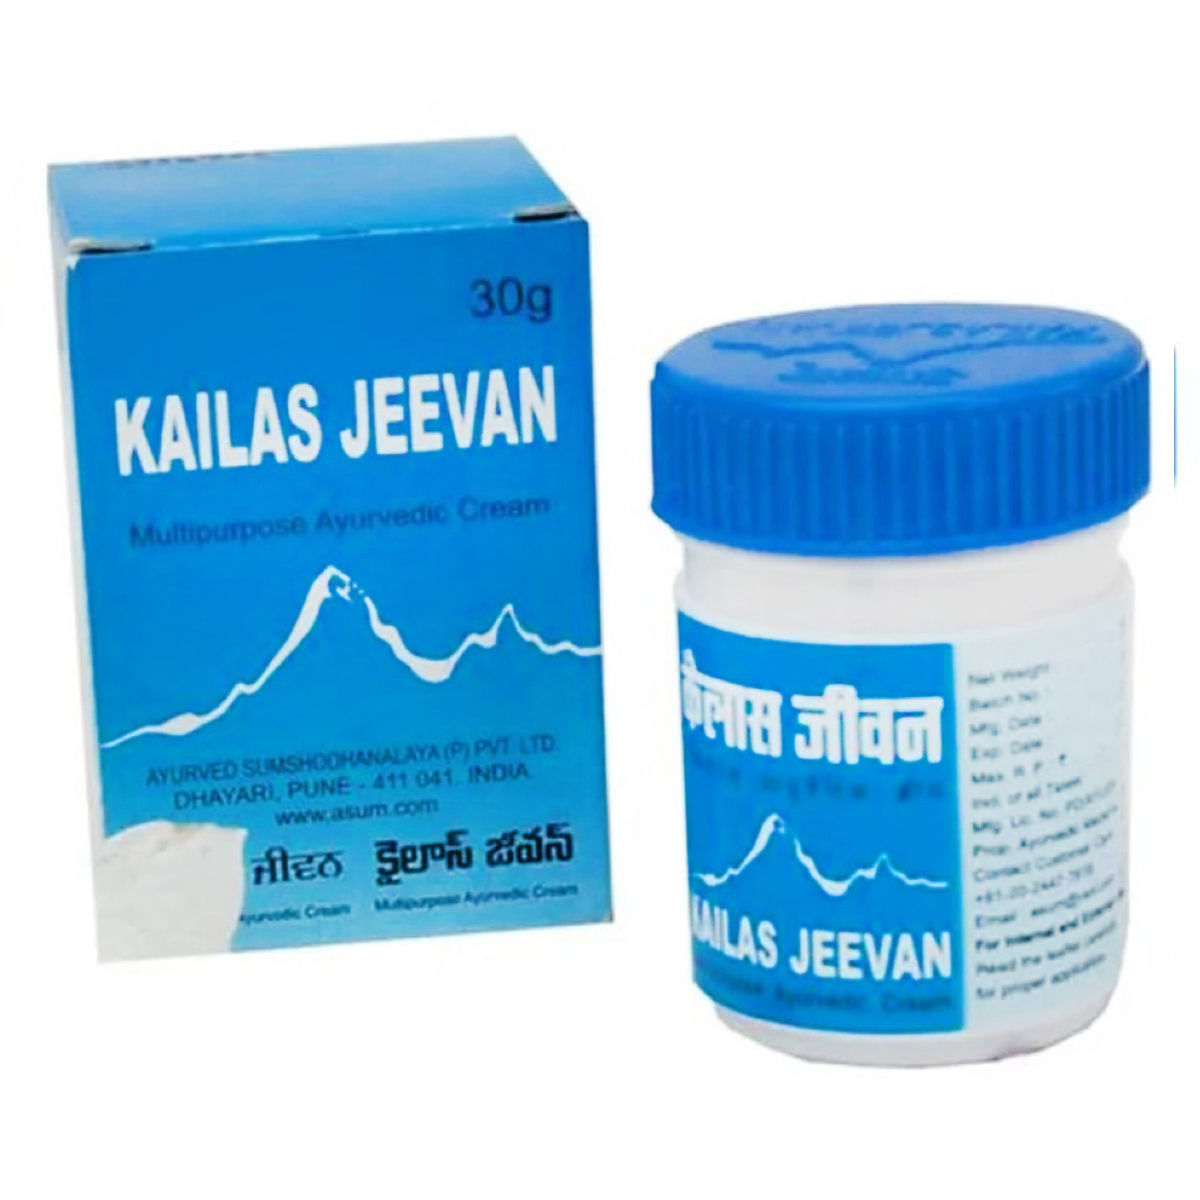 Buy Kailas Jeevan Multipurpose Ayurvedic Cream, 30 gm Online